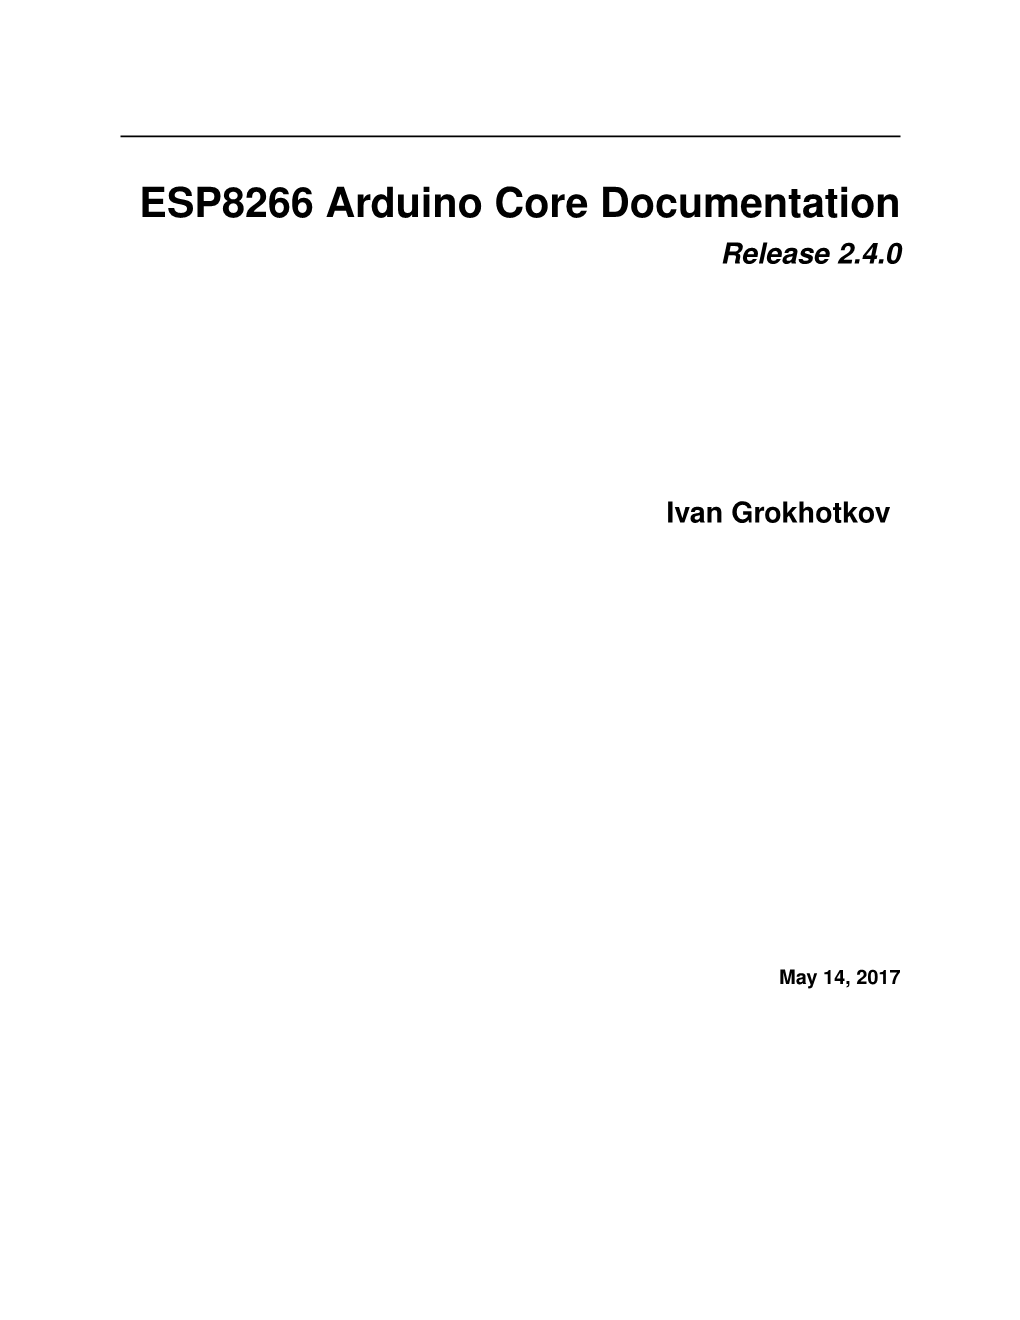 ESP8266 Arduino Core Documentation Release 2.4.0